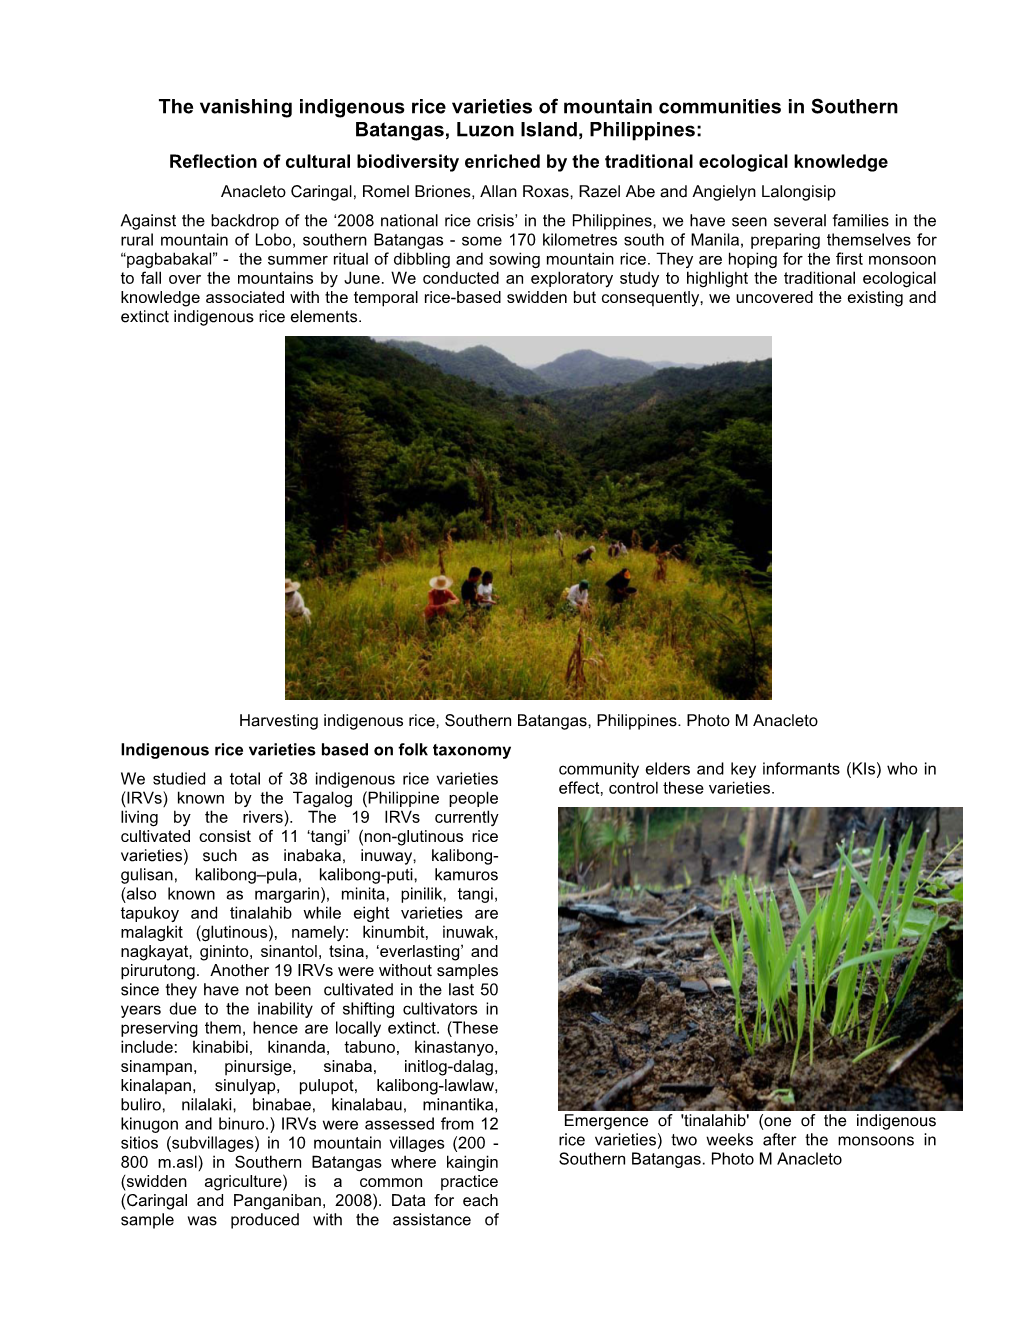 The Vanishing Indigenous Rice Varieties of Mountain Communities